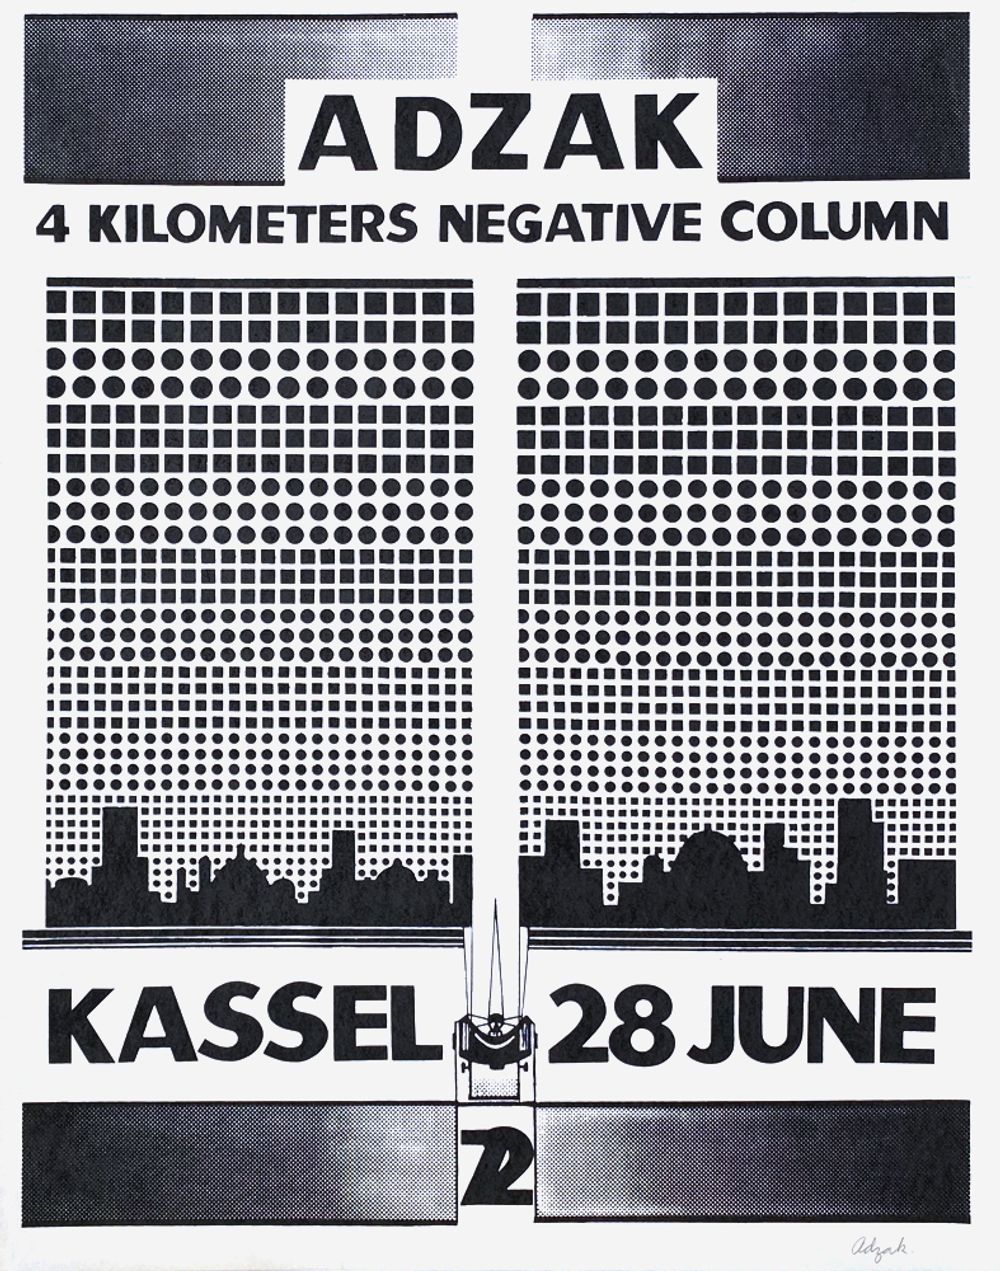 4 kilometers negative column - Kassel 28 june 72